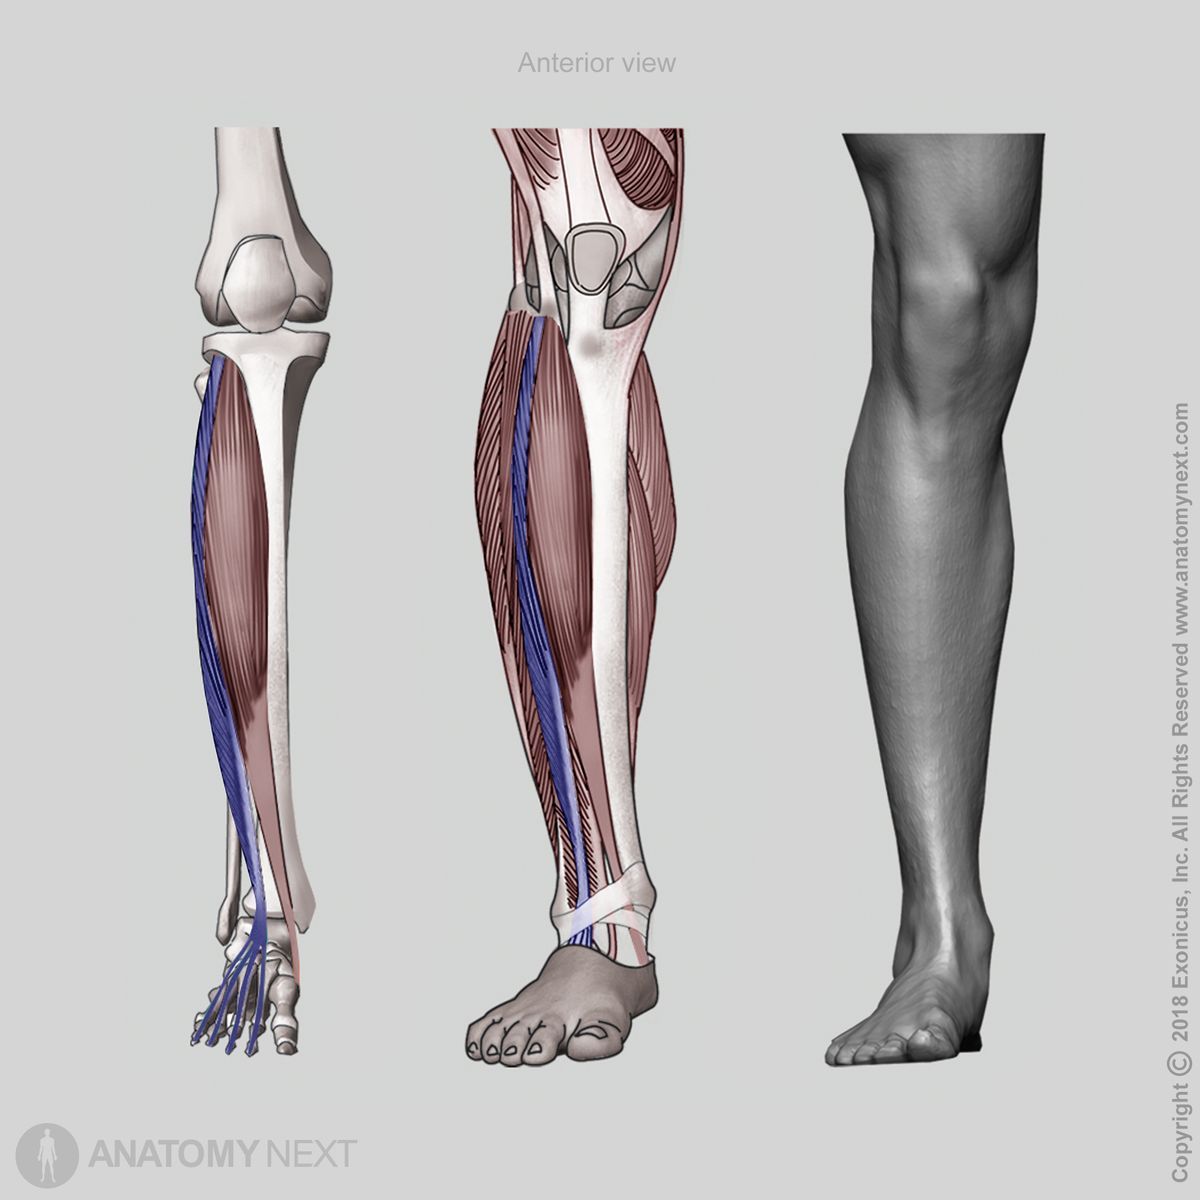 Extensor digitorum longus, Anterior compartment of leg, Leg extensors, Leg muscles, Anterior compartment muscles, Human leg